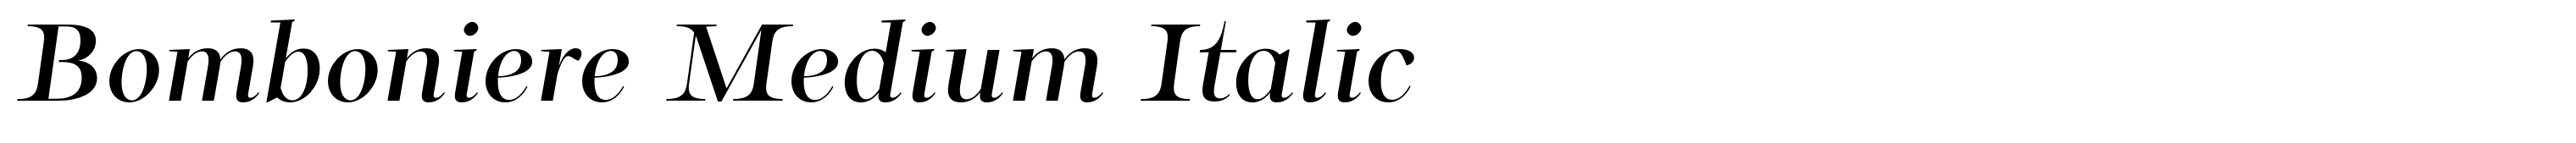 Bomboniere Medium Italic